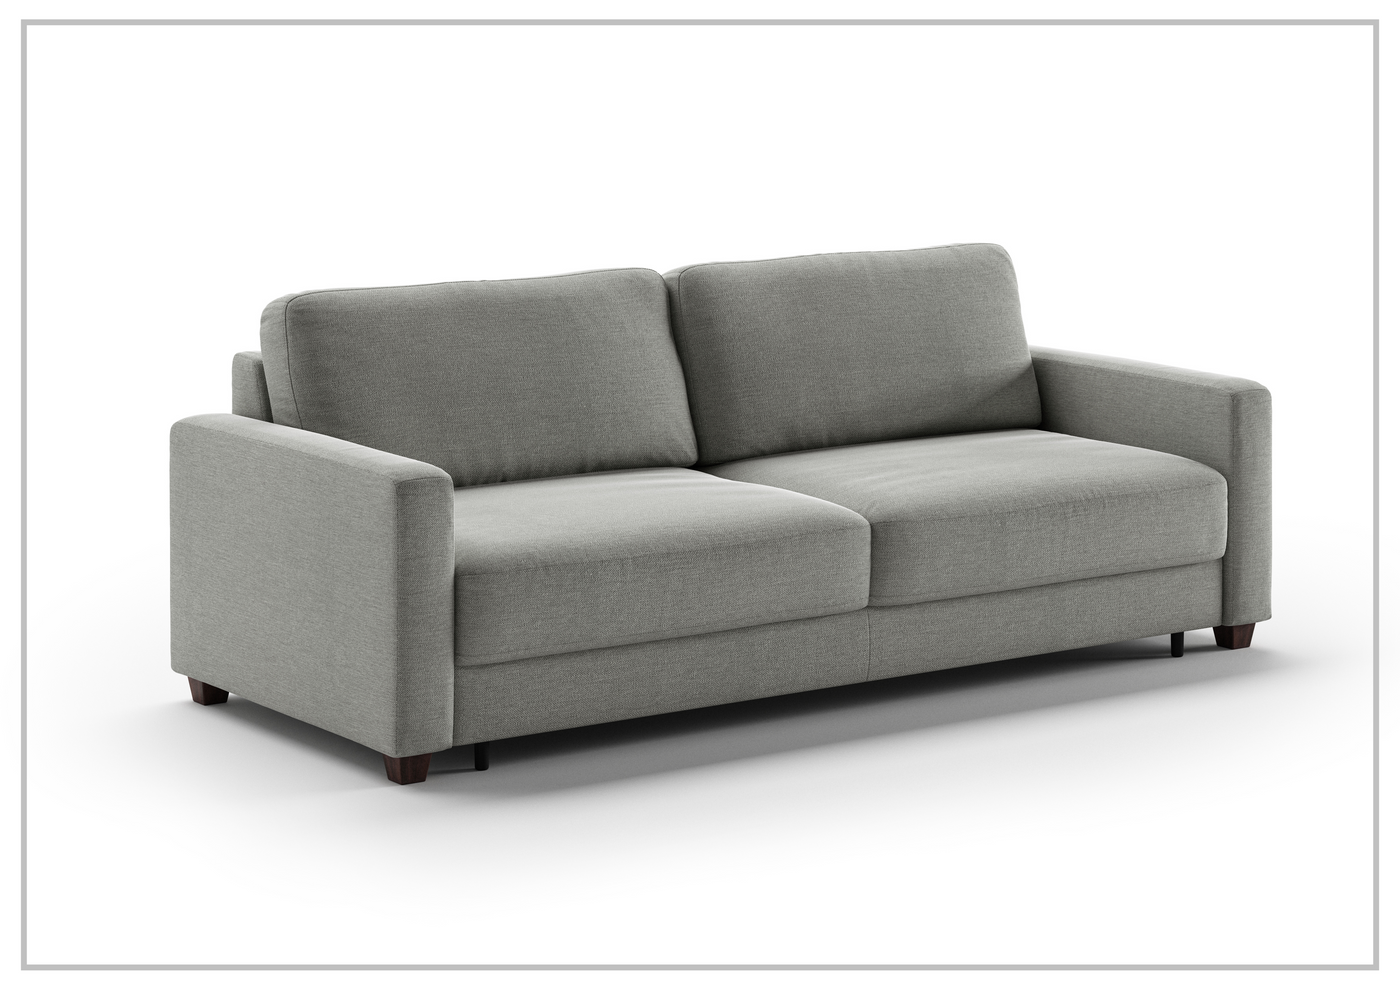 Luonto Hampton Fabric Sleeper Sofa with Hybrid Function